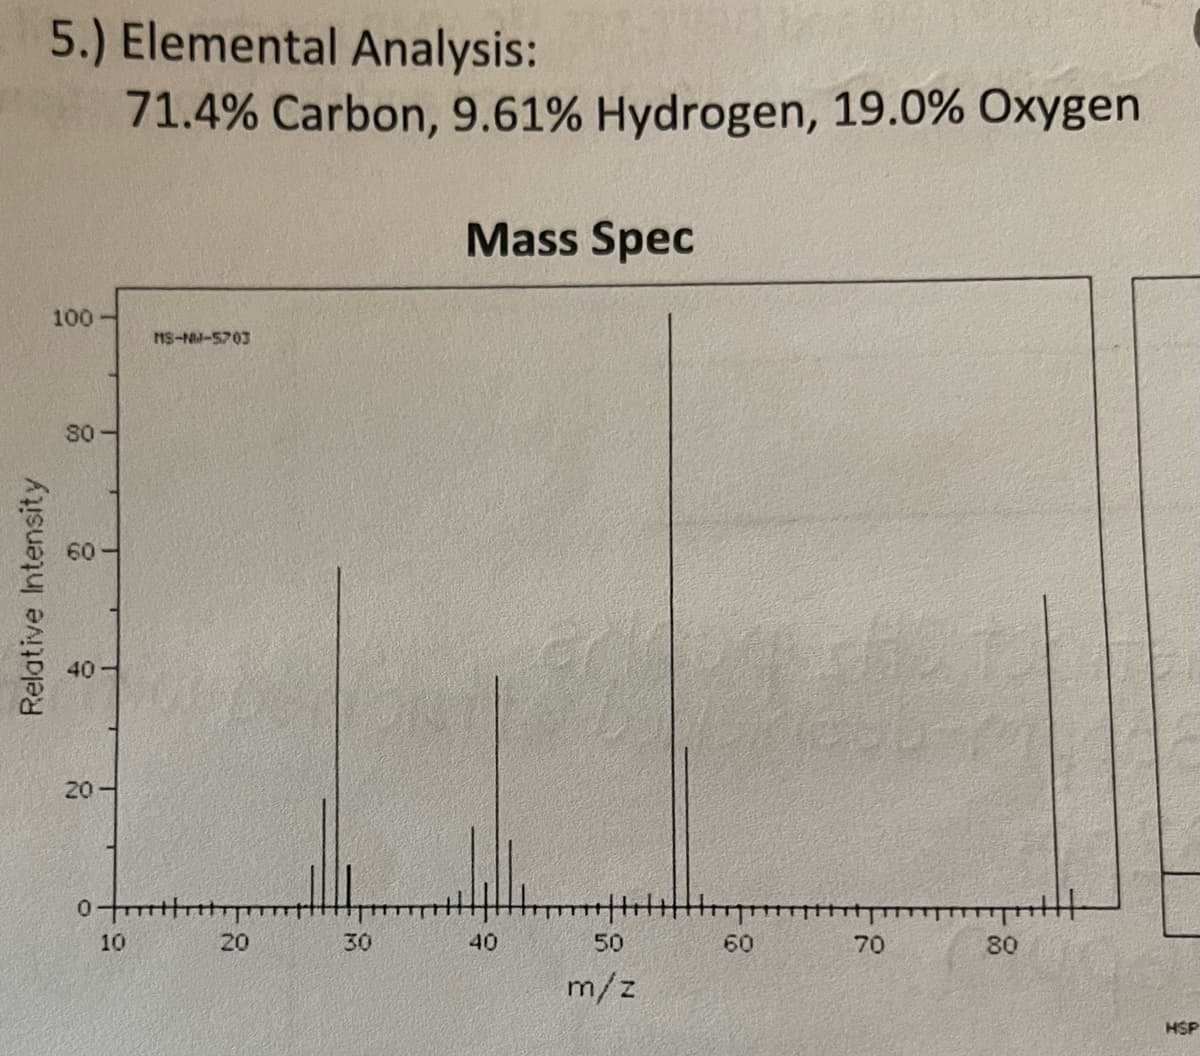 5.) Elemental Analysis:
71.4% Carbon, 9.61% Hydrogen, 19.0% Oxygen
100
80-
8
Relative Intensity
40-
20-
0
10
MS-NU-5703
20
30
Mass Spec
40
50
m/z
60
70
80
t
HSP